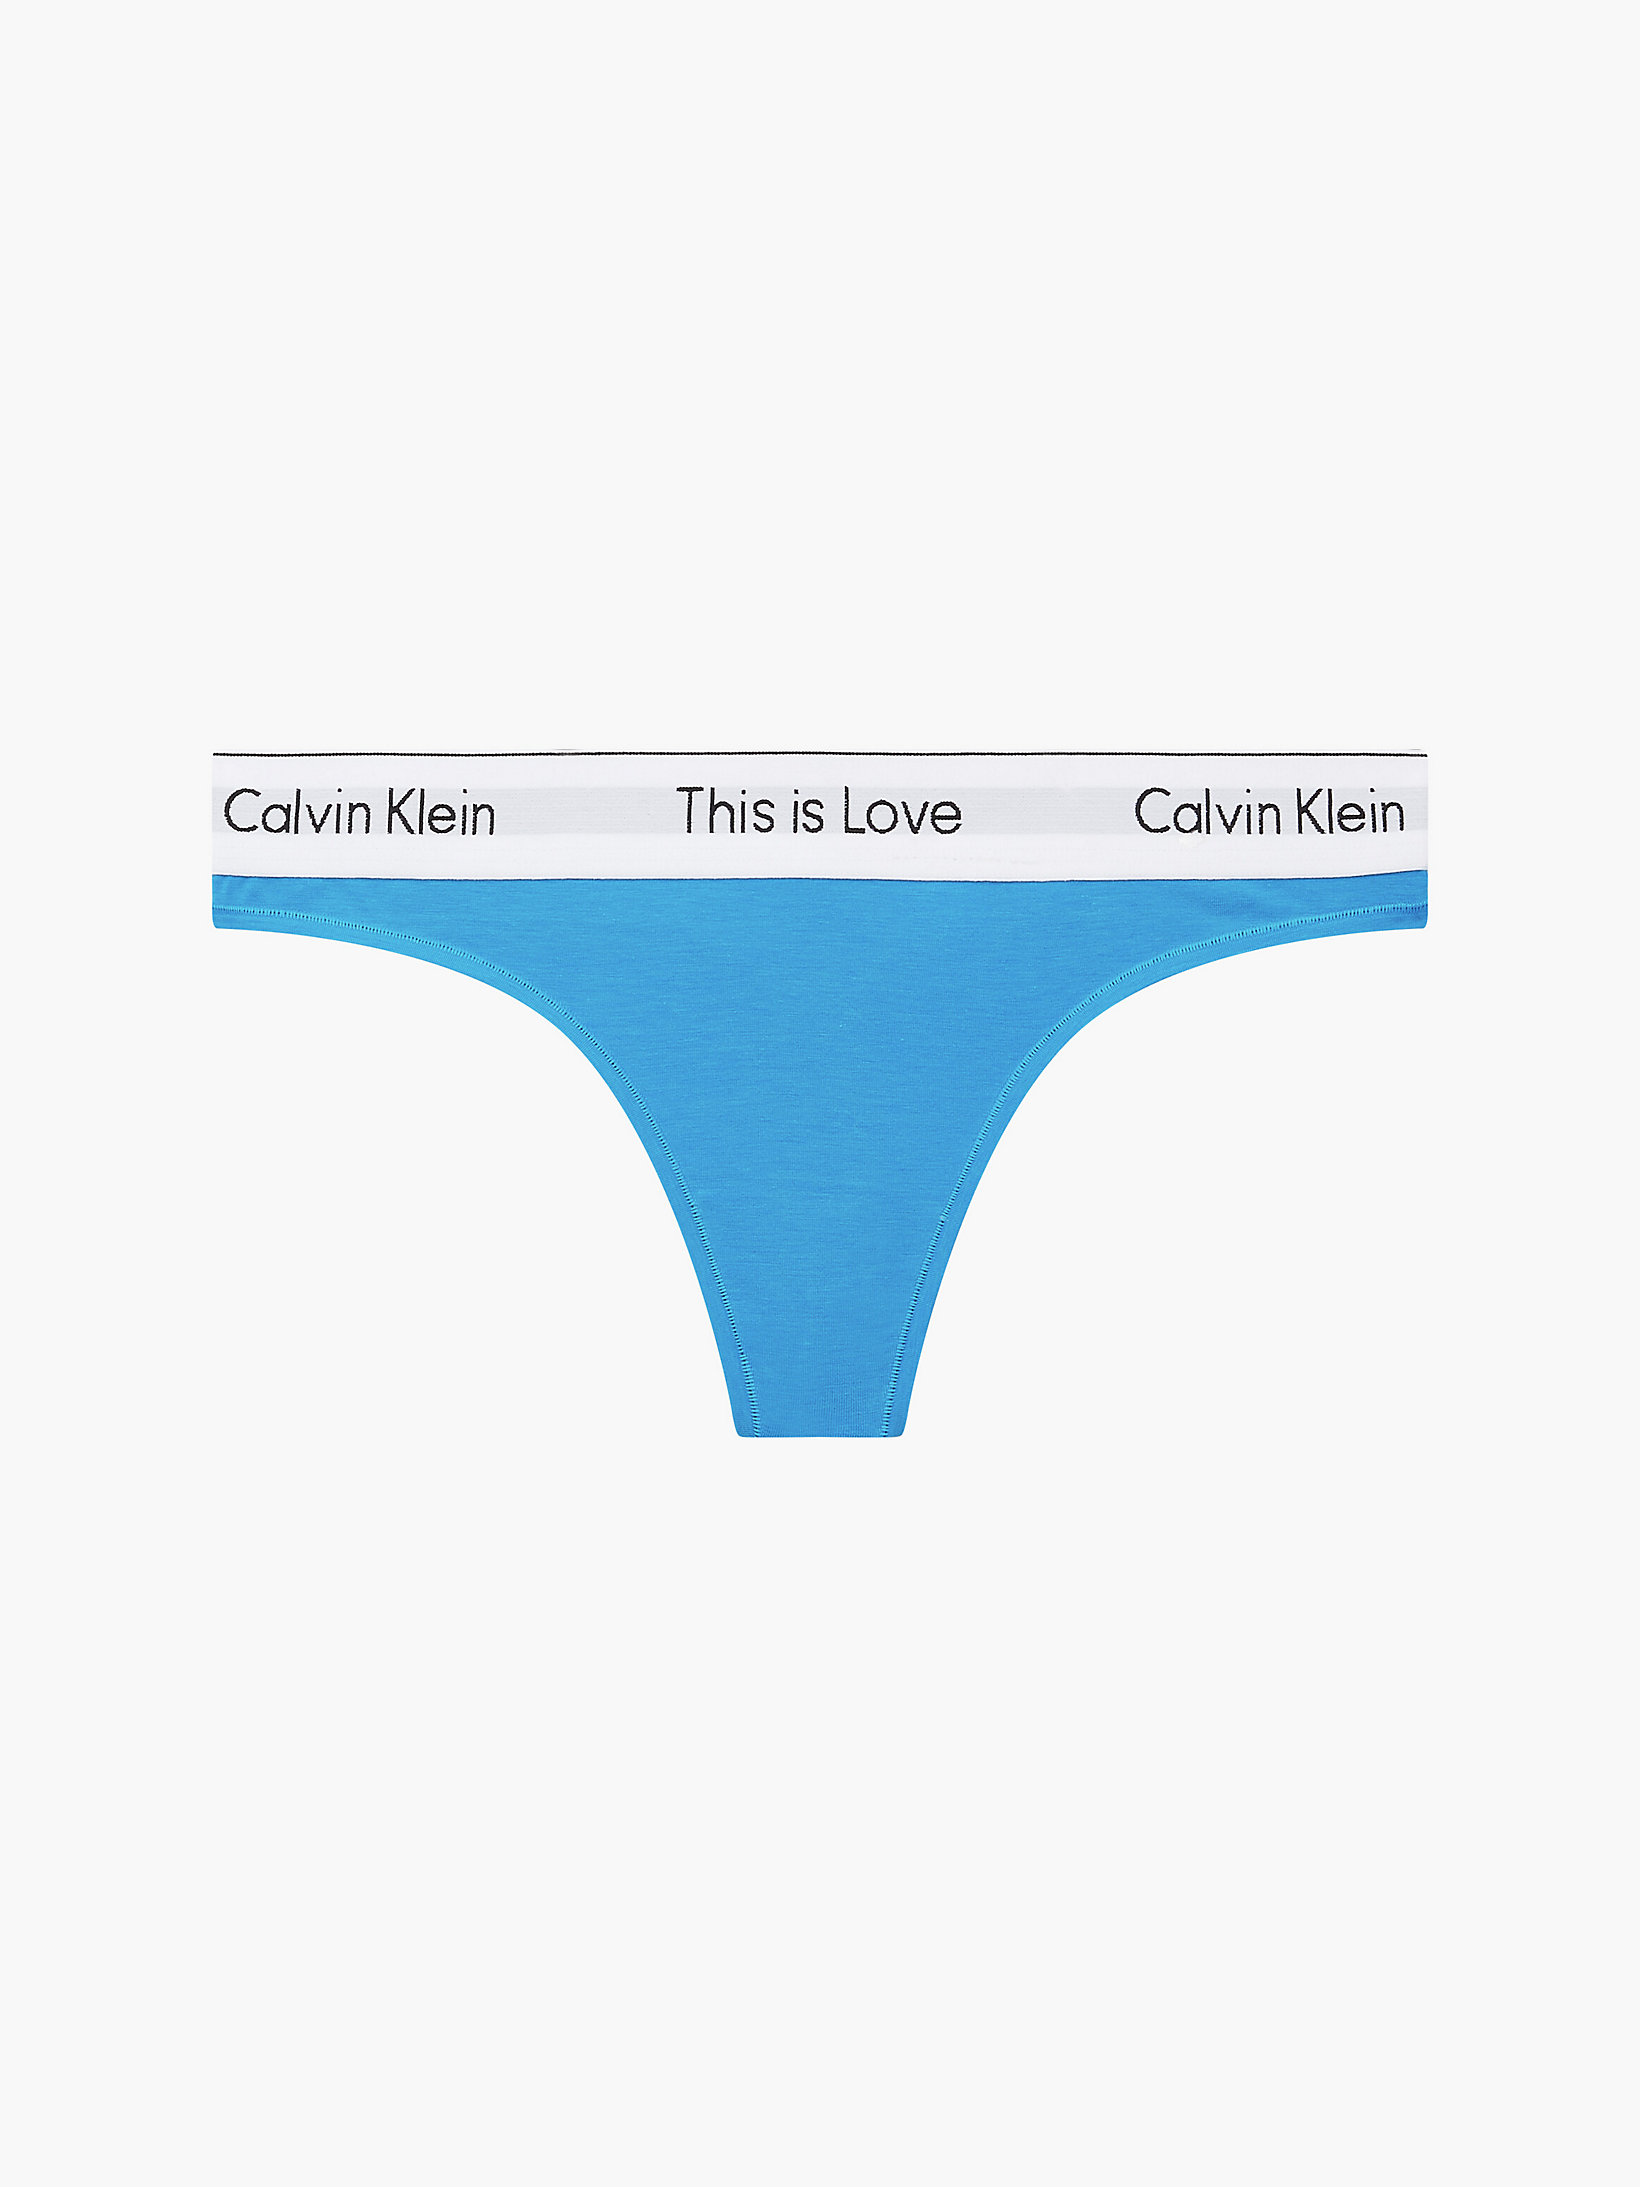 Deep Sky Blue Thong - Pride undefined women Calvin Klein